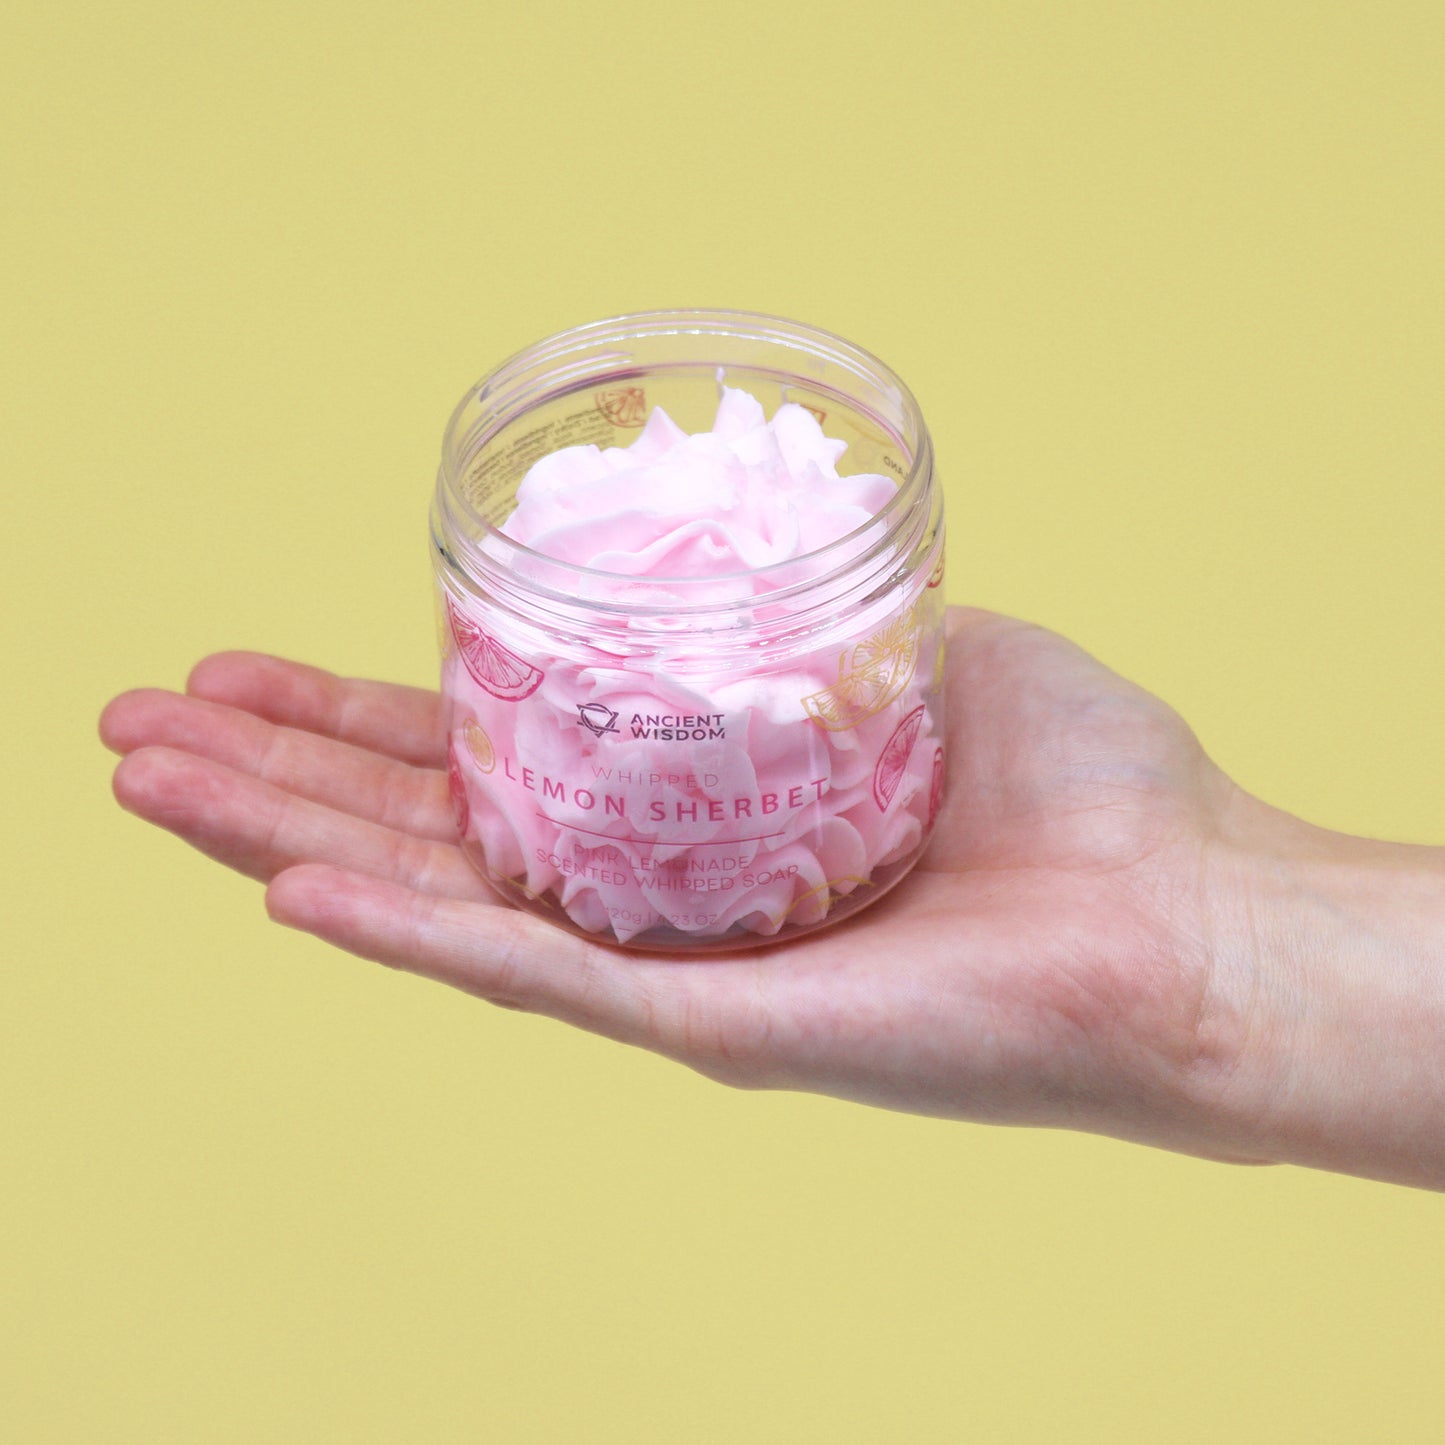 Pink Lemonade Whipped Cream Soap 120g - ScentiMelti Wax Melts